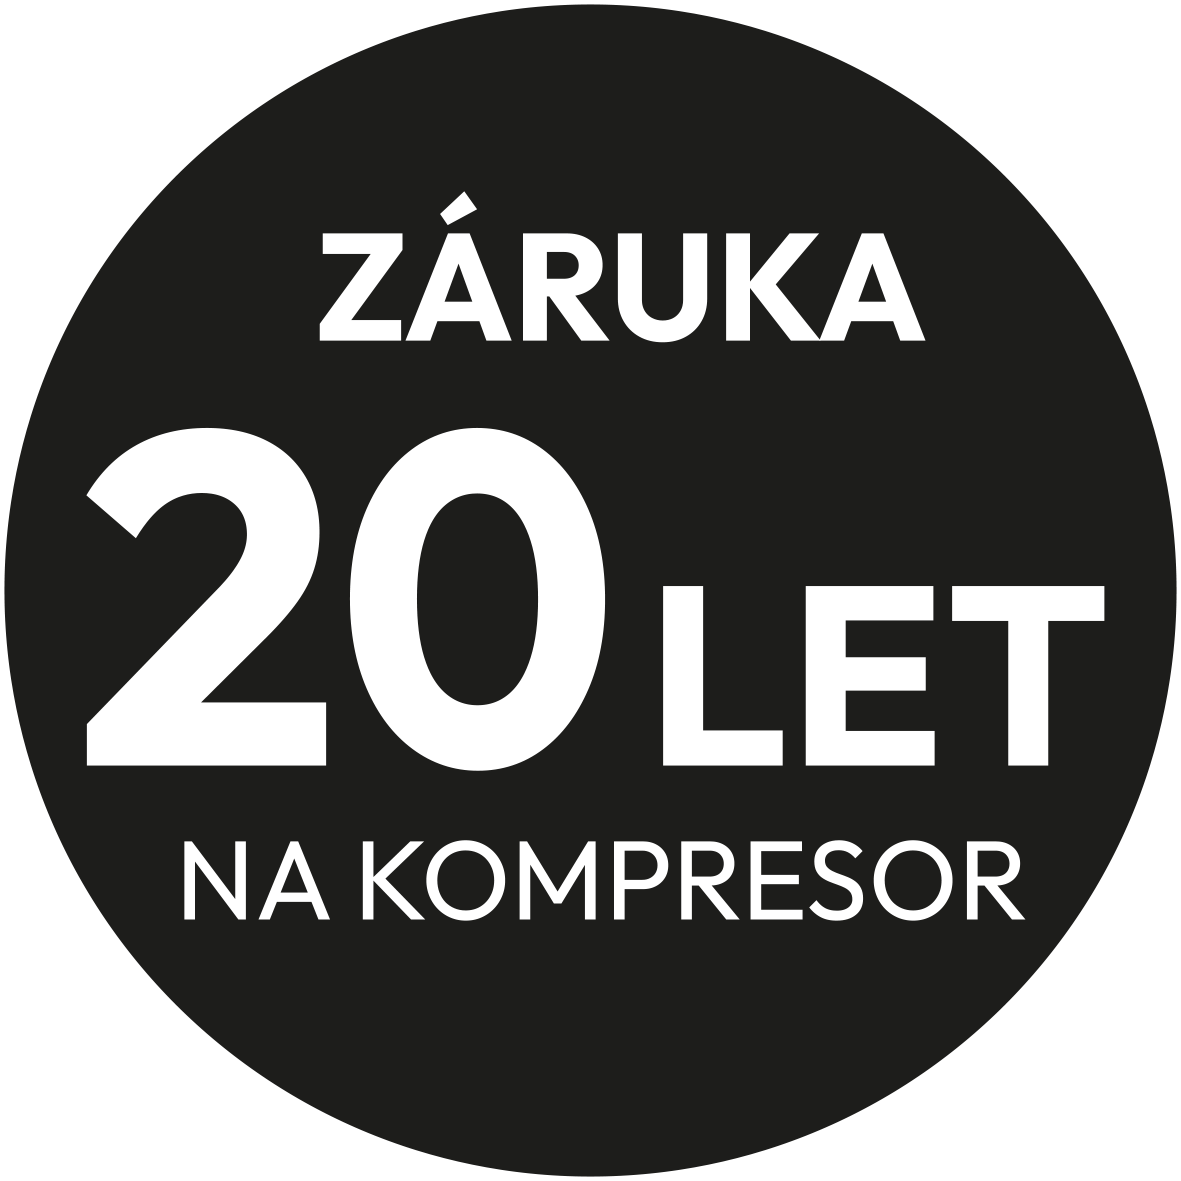 haier-zaruka-20-let-kompresor